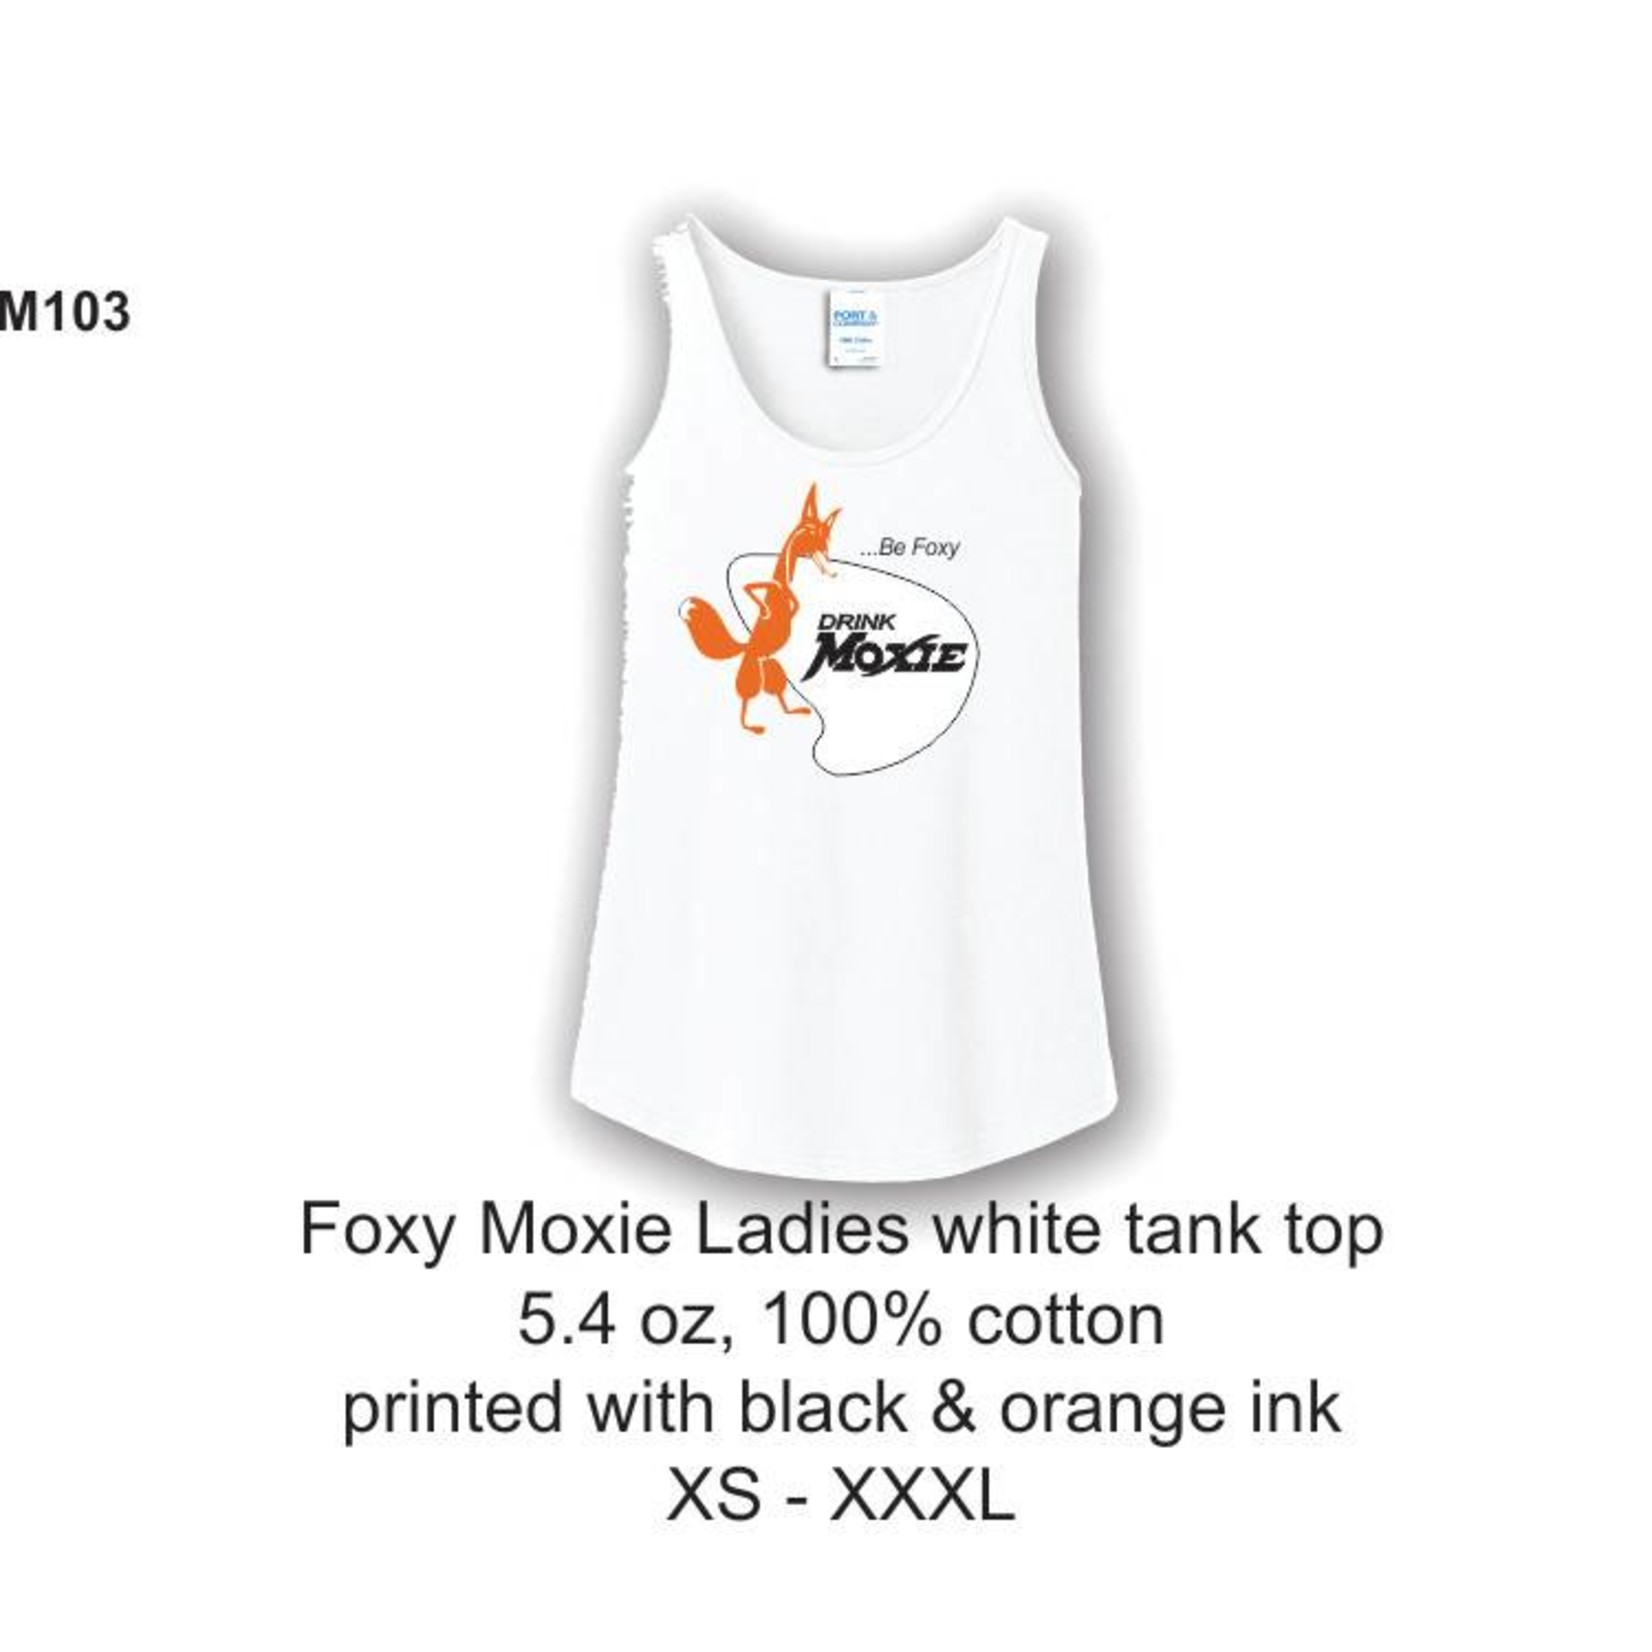 Be Foxy Drink Moxie Ladies Tank